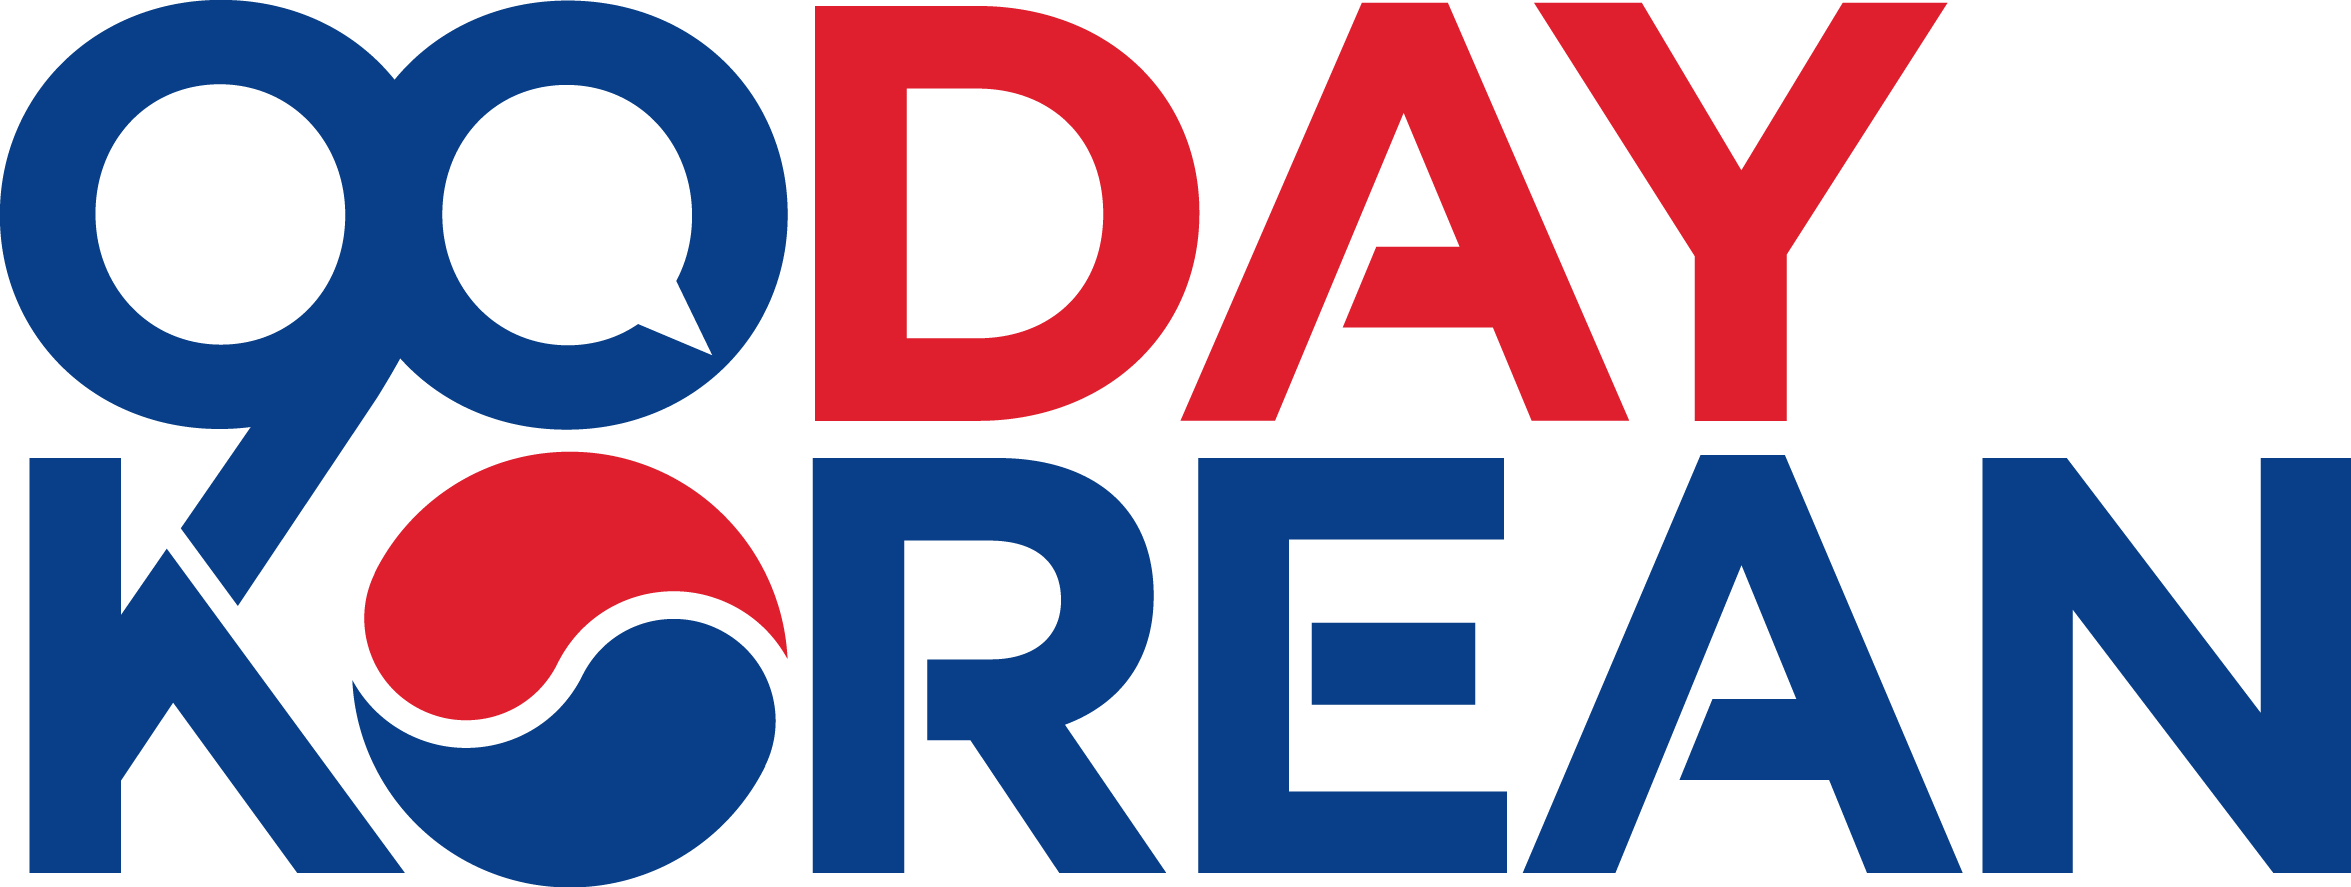 90 Day Korean